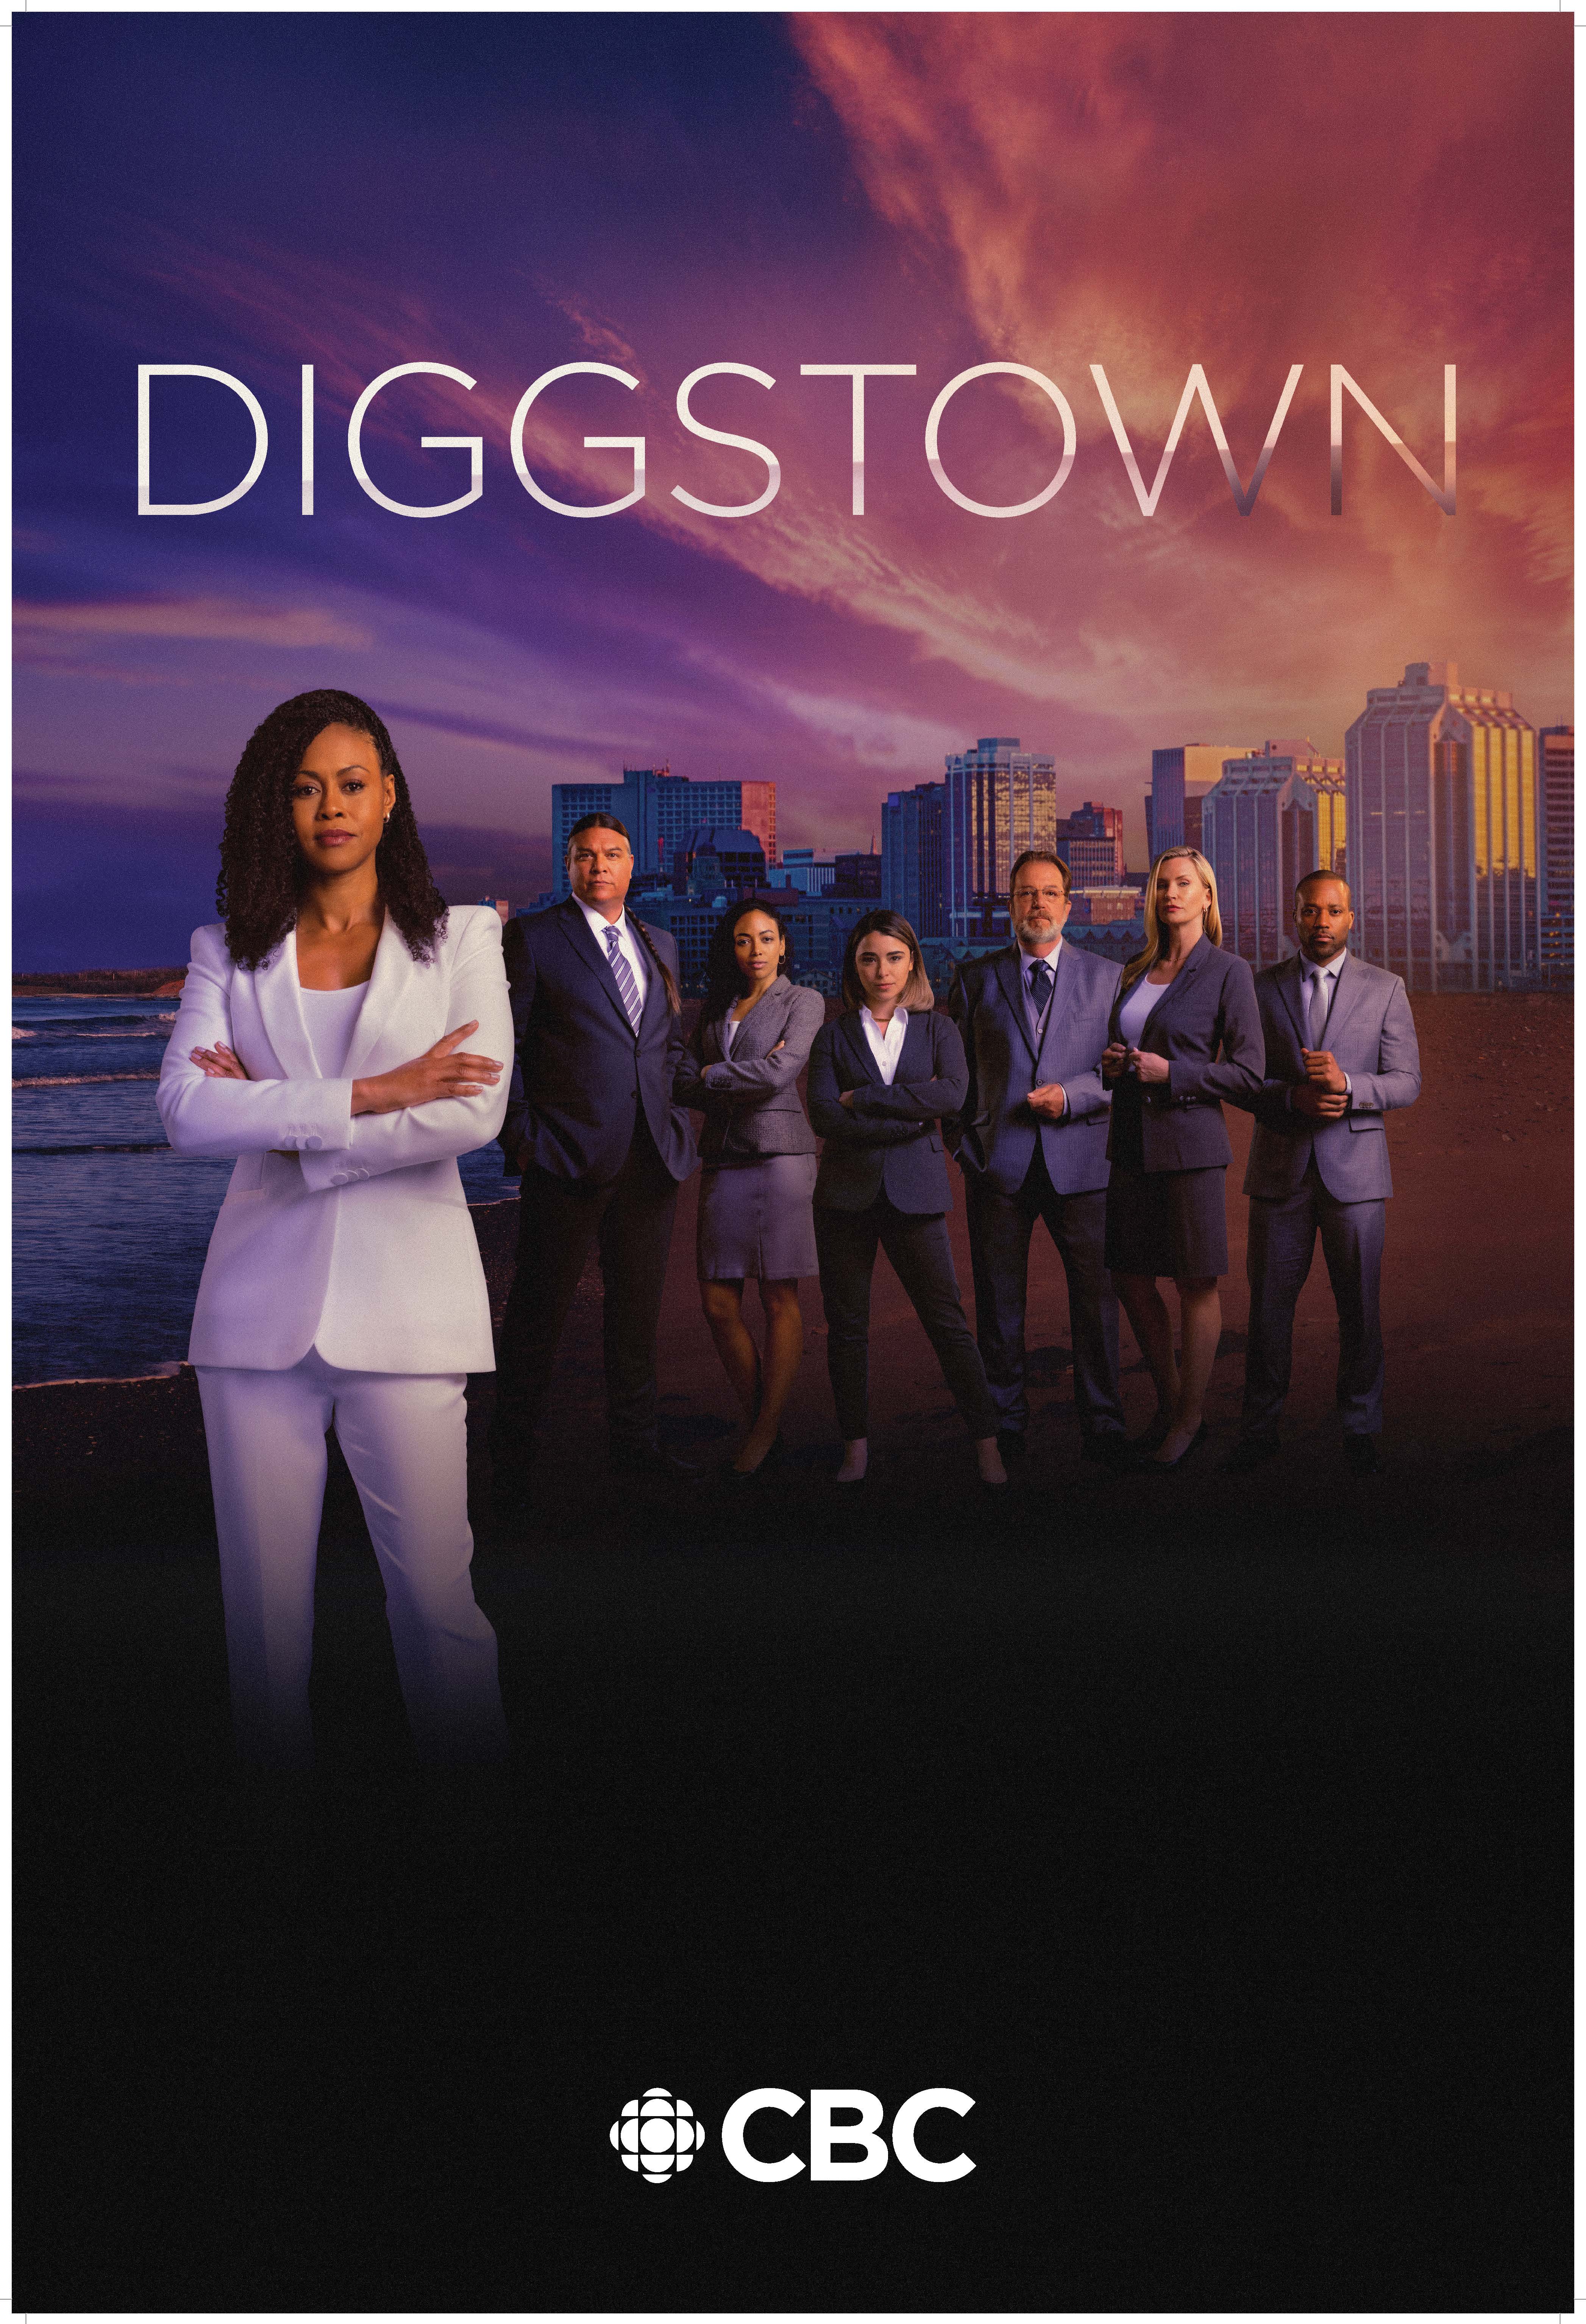 Diggstown - Season 4